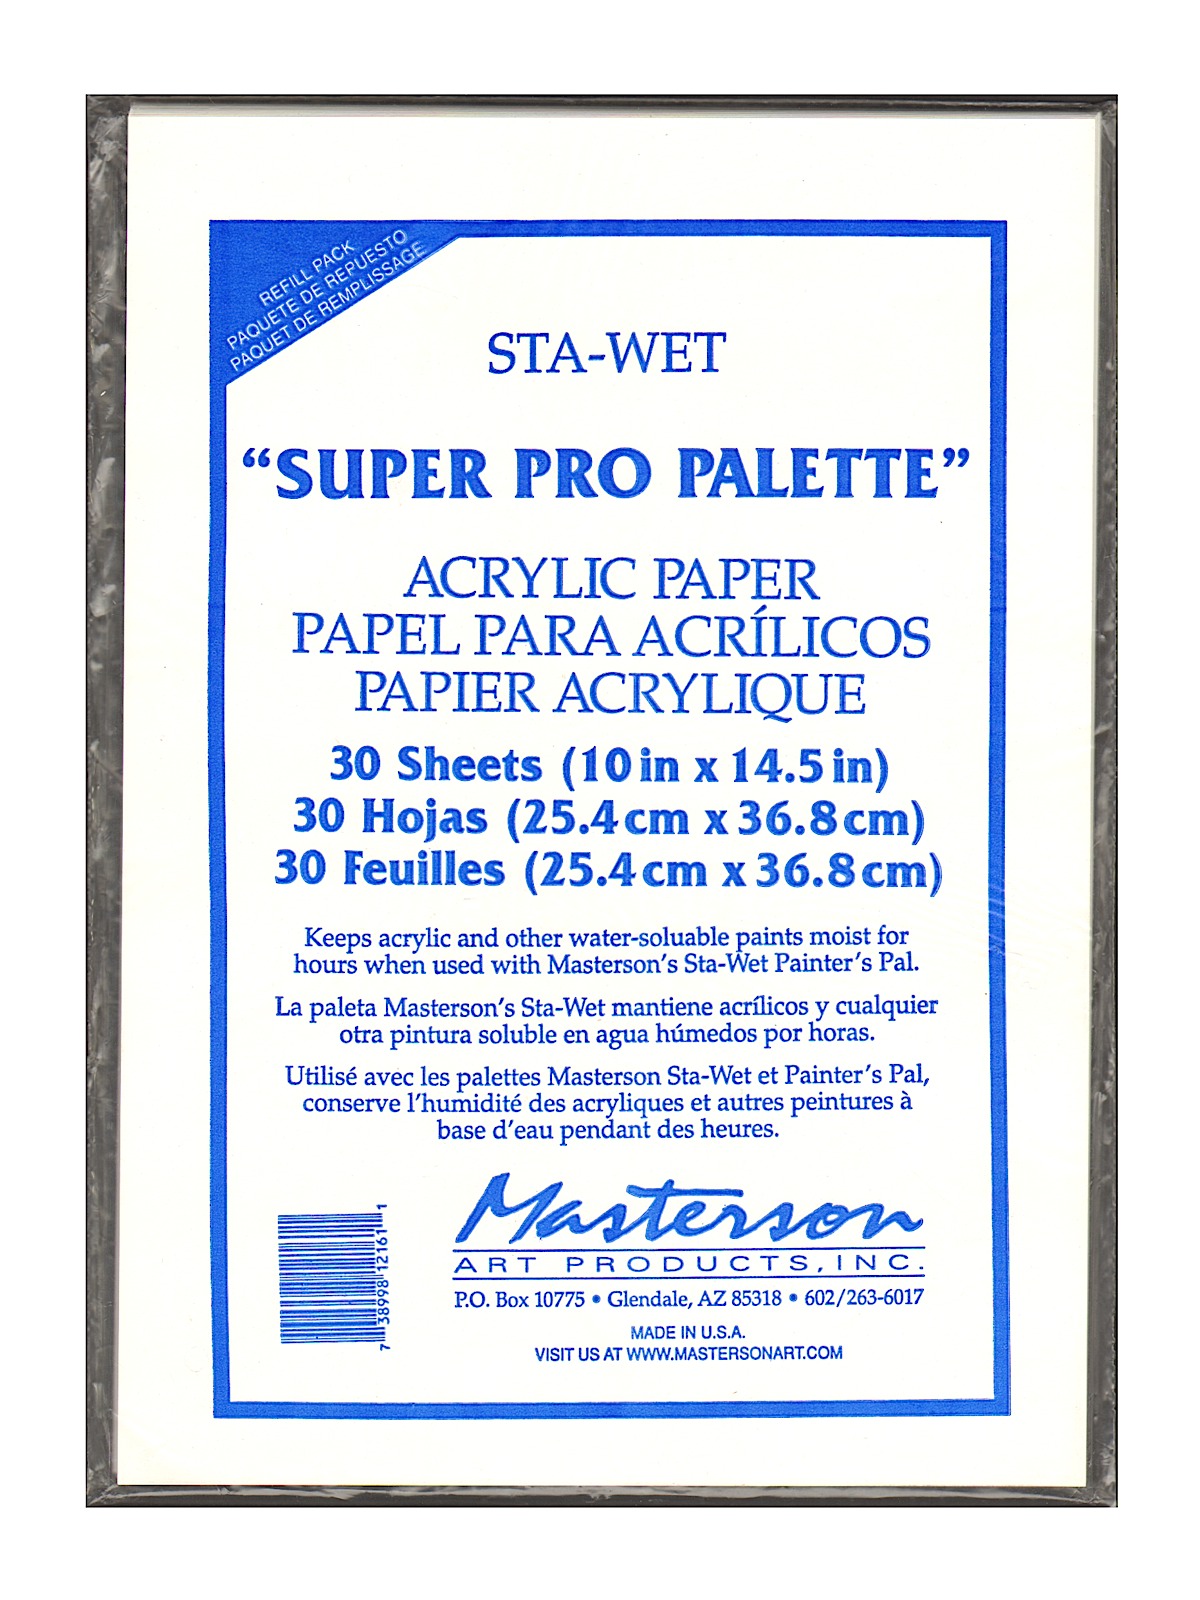 Masterson Sta-Wet Painter's Pal Palette Sponge Refill 1 Pack